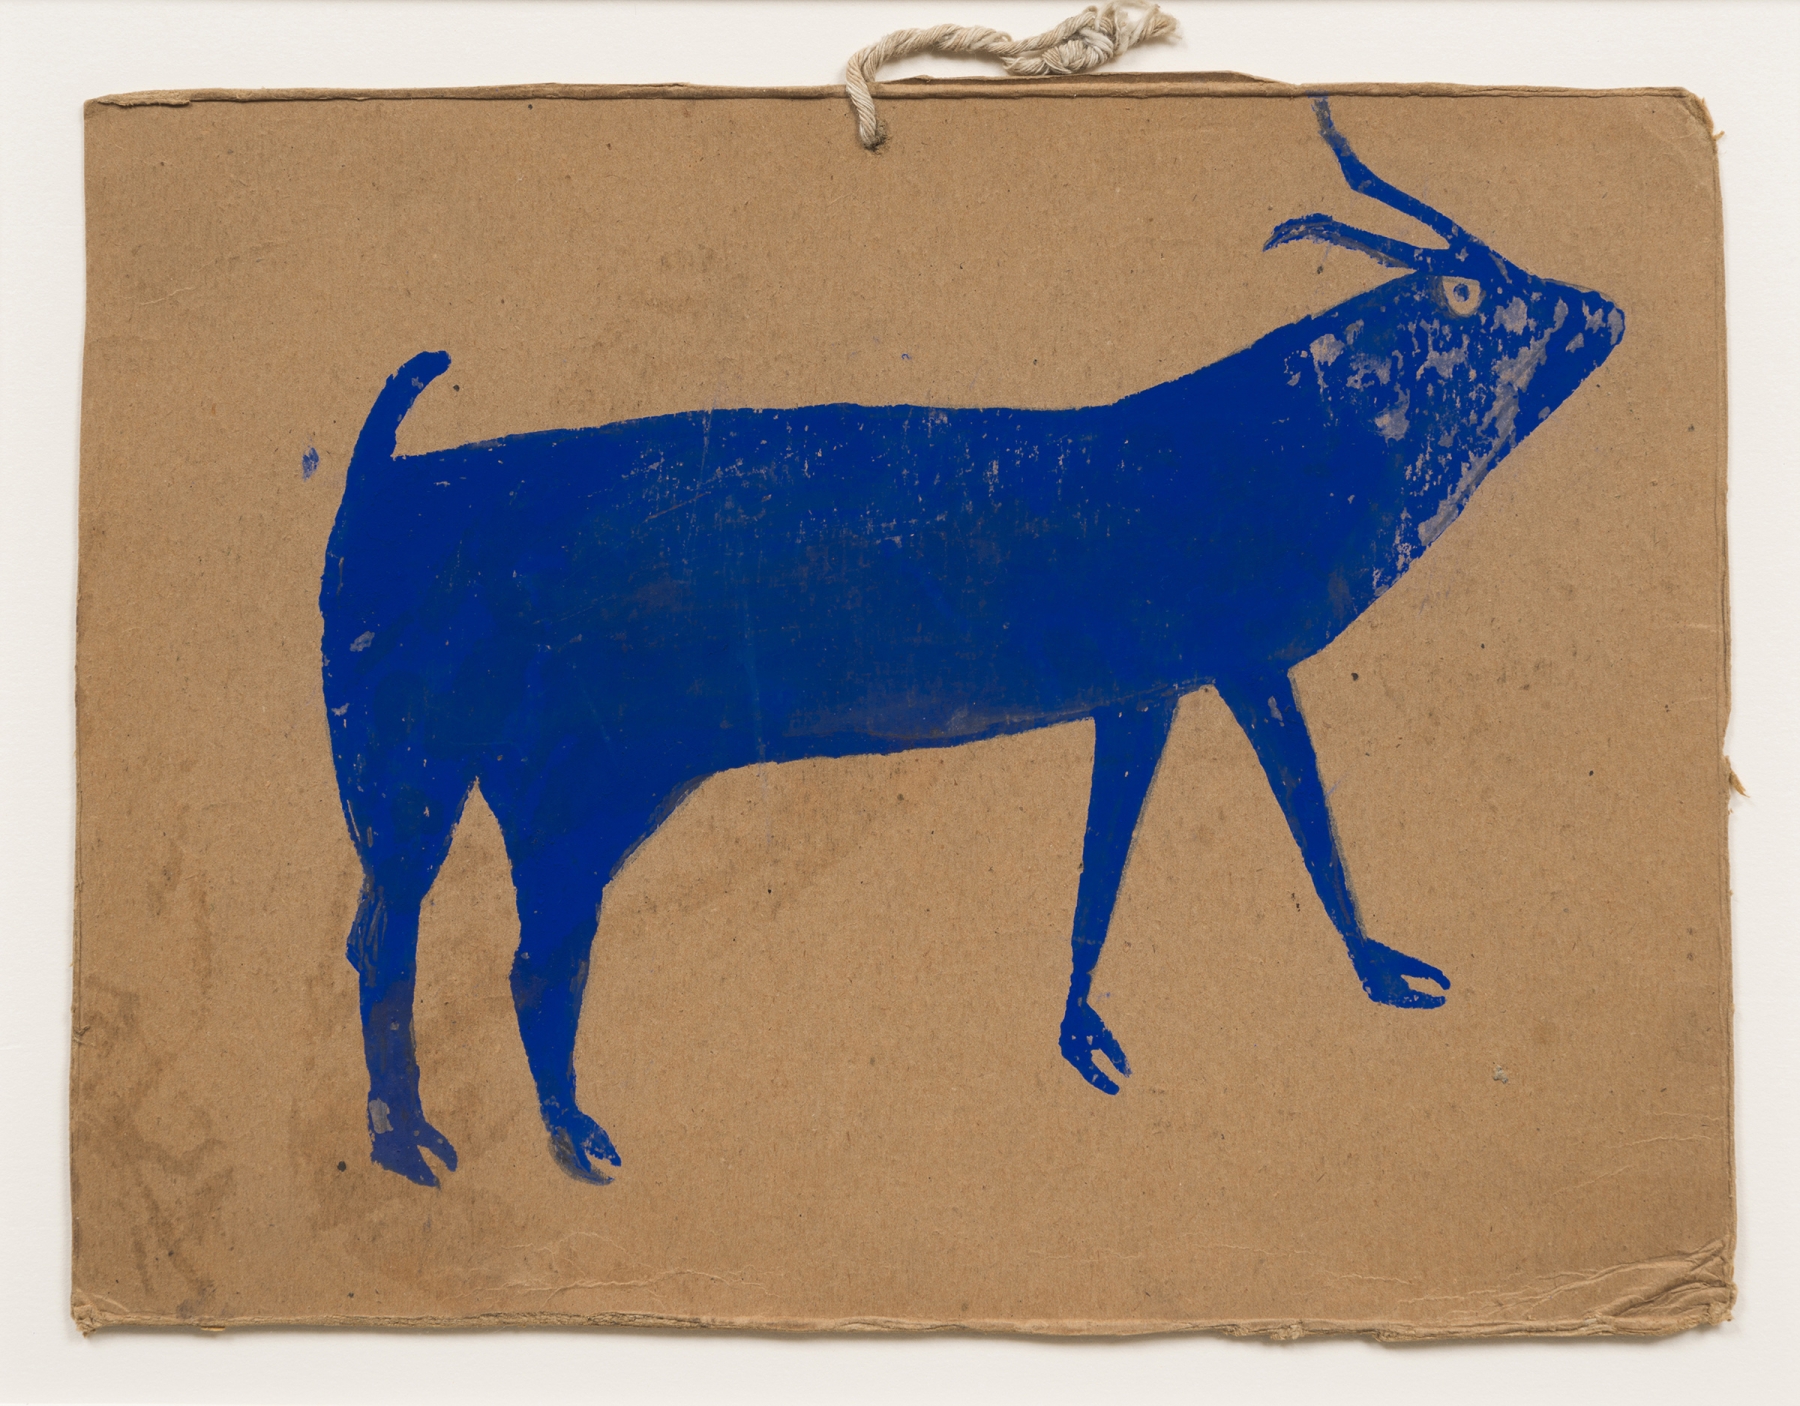 Bill Traylor,&nbsp;Spiritual Blue Goat, 1939&ndash;42;&nbsp;poster paint on cardboard,&nbsp;9h x 12w in/&nbsp;22.86h x 30.48w cm

Inquire